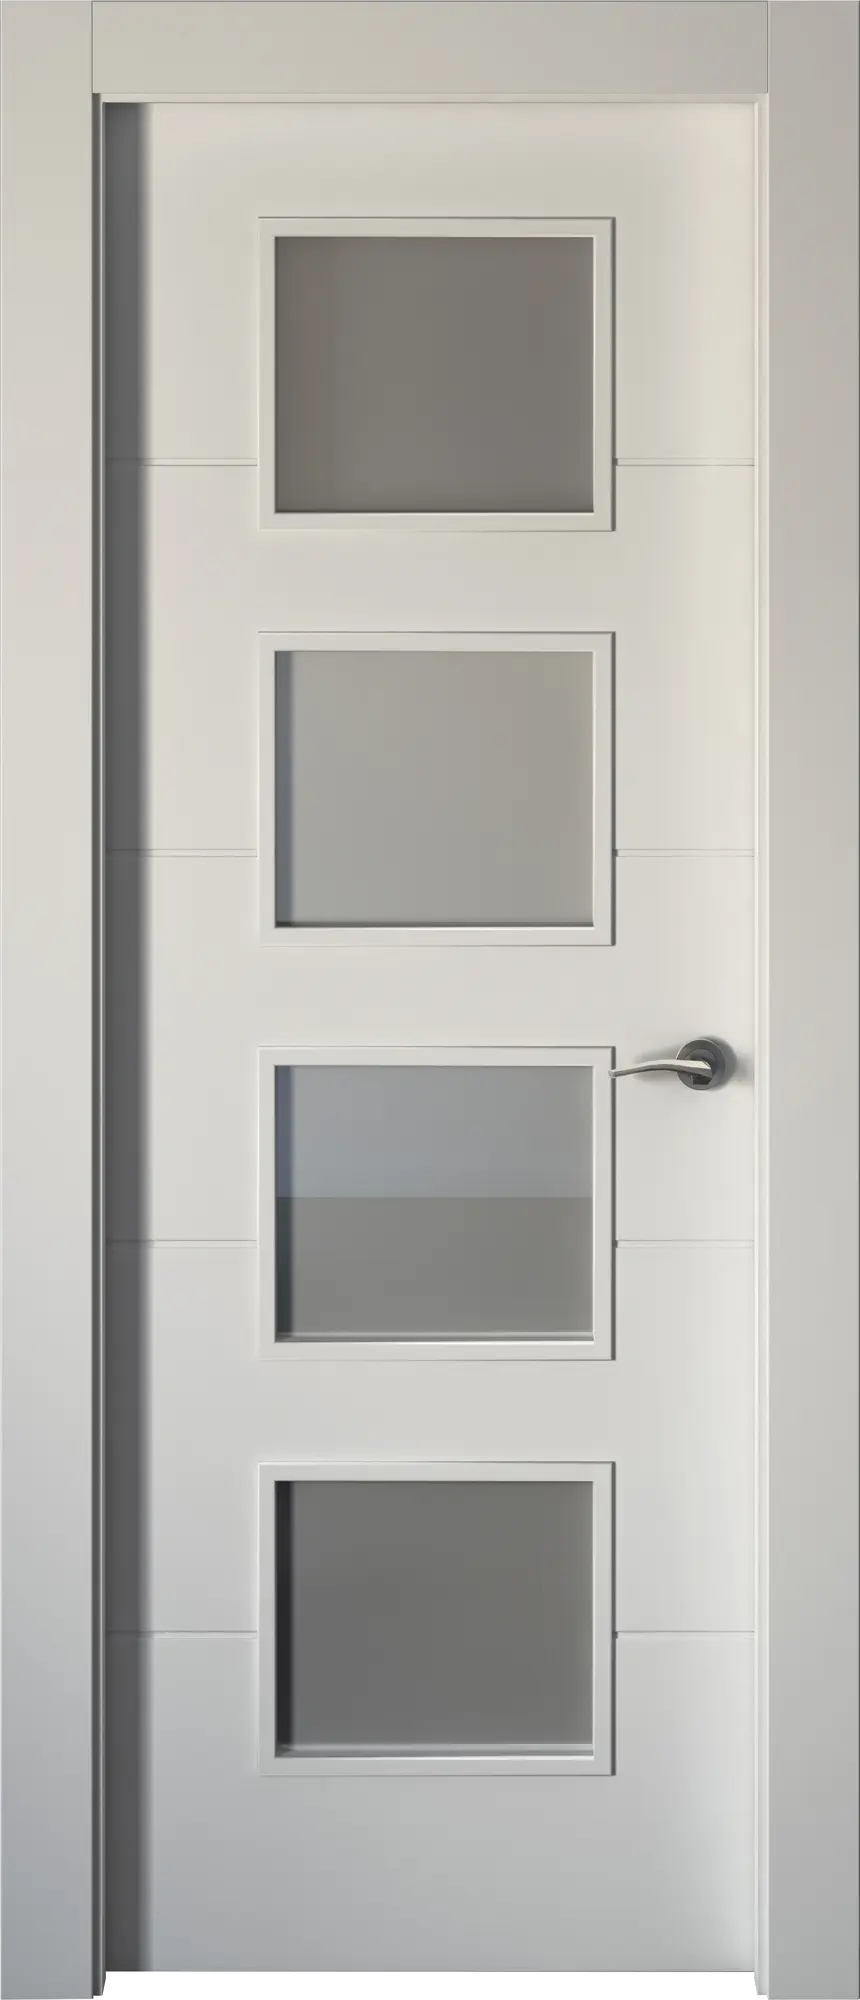 Puerta holanda blanco apertura izquierda con cristal62.5cm